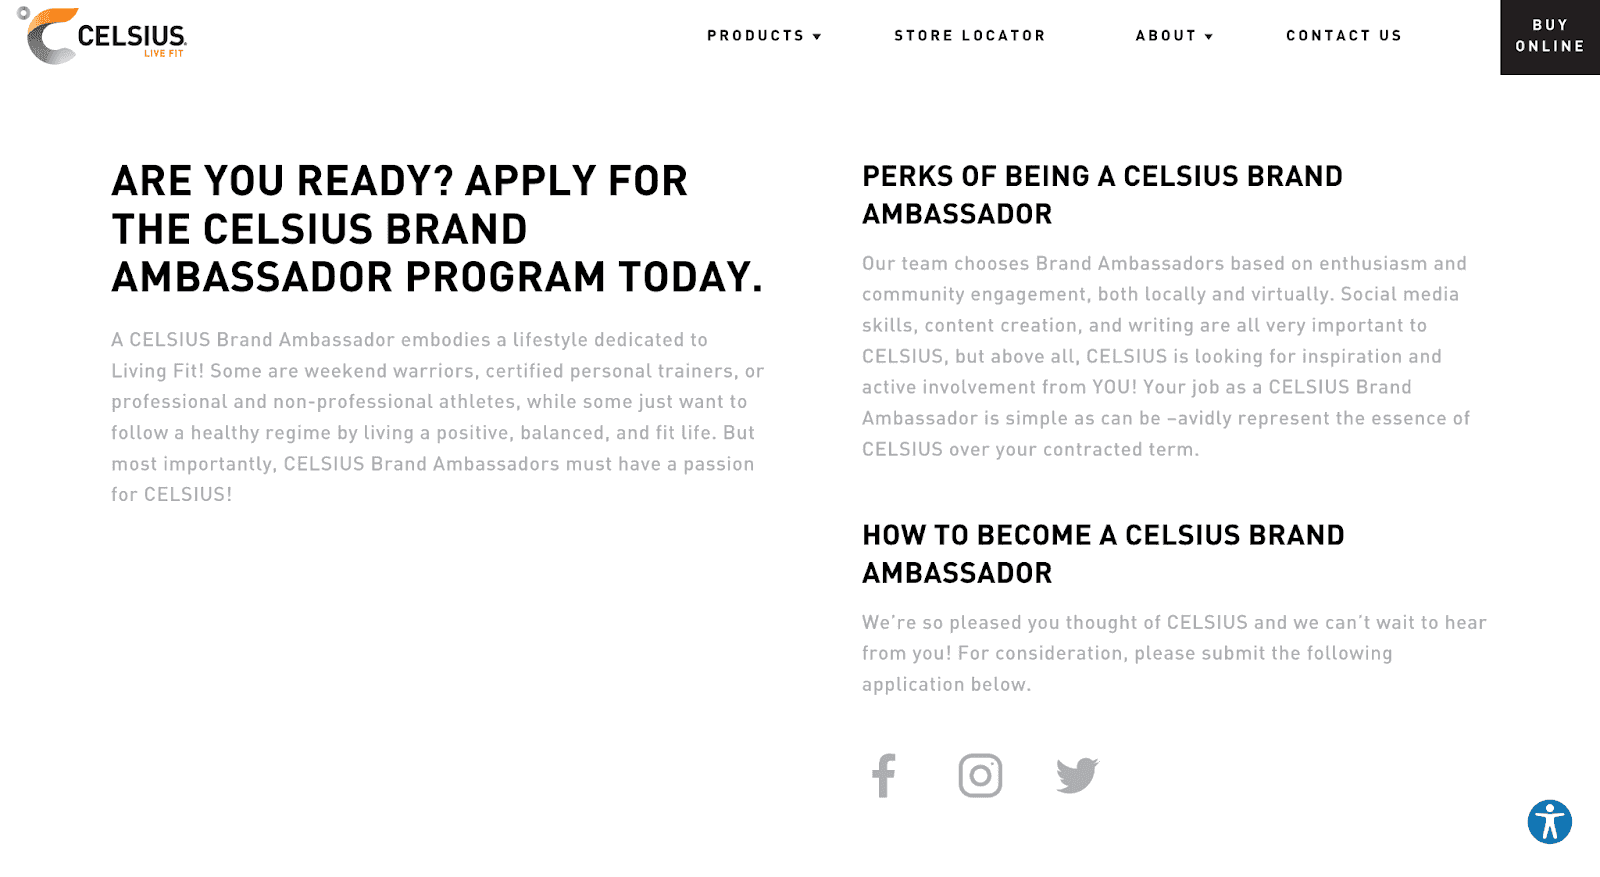 Celsius ambassador program as an advertisement method